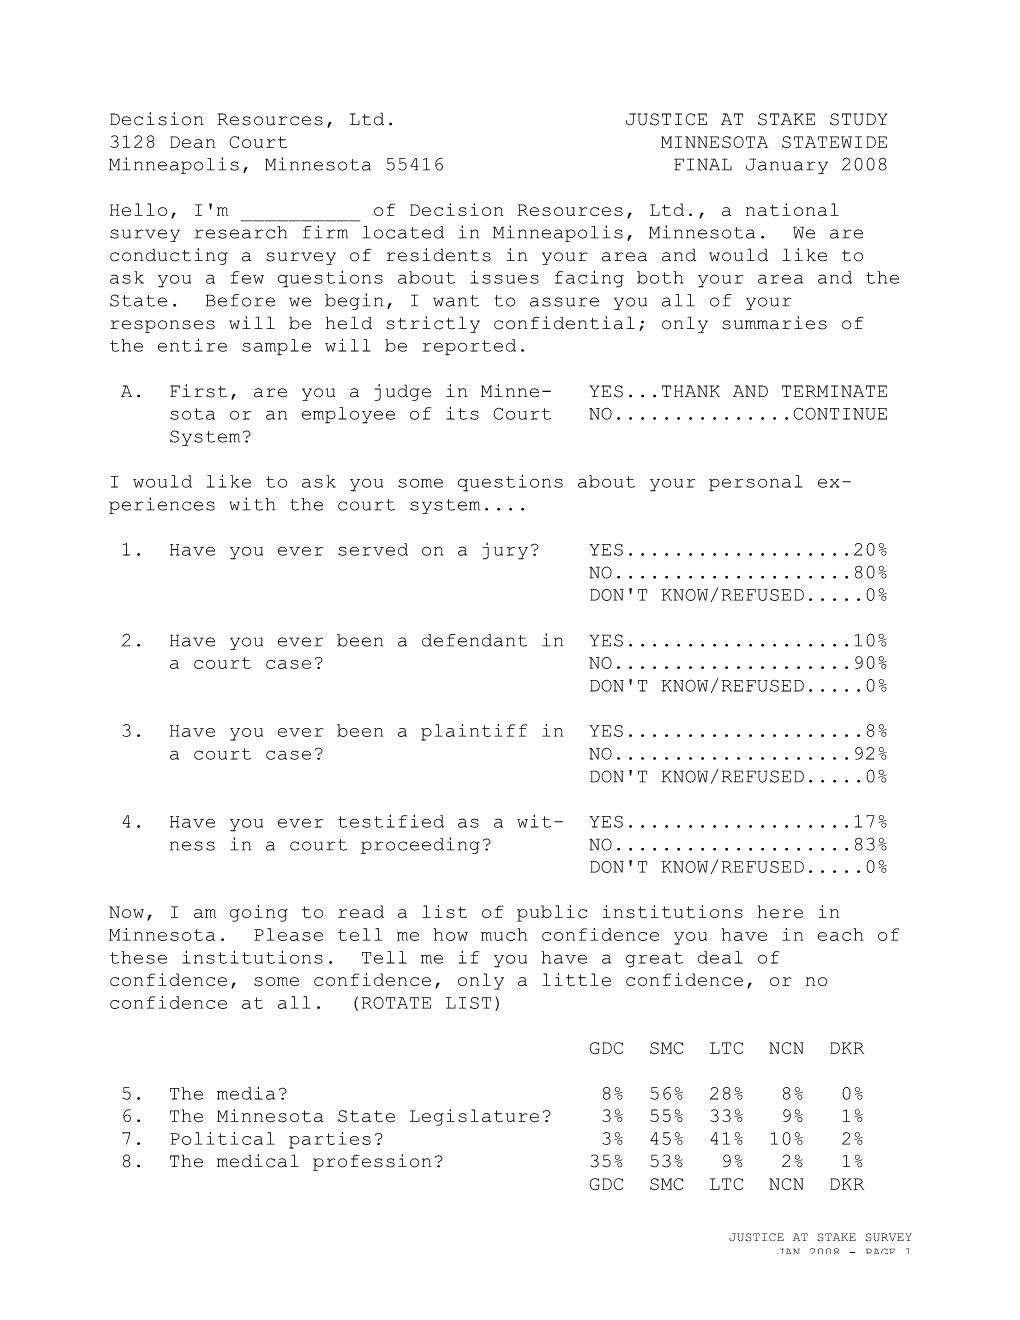 2008 Minnesota Public Opinion Poll On